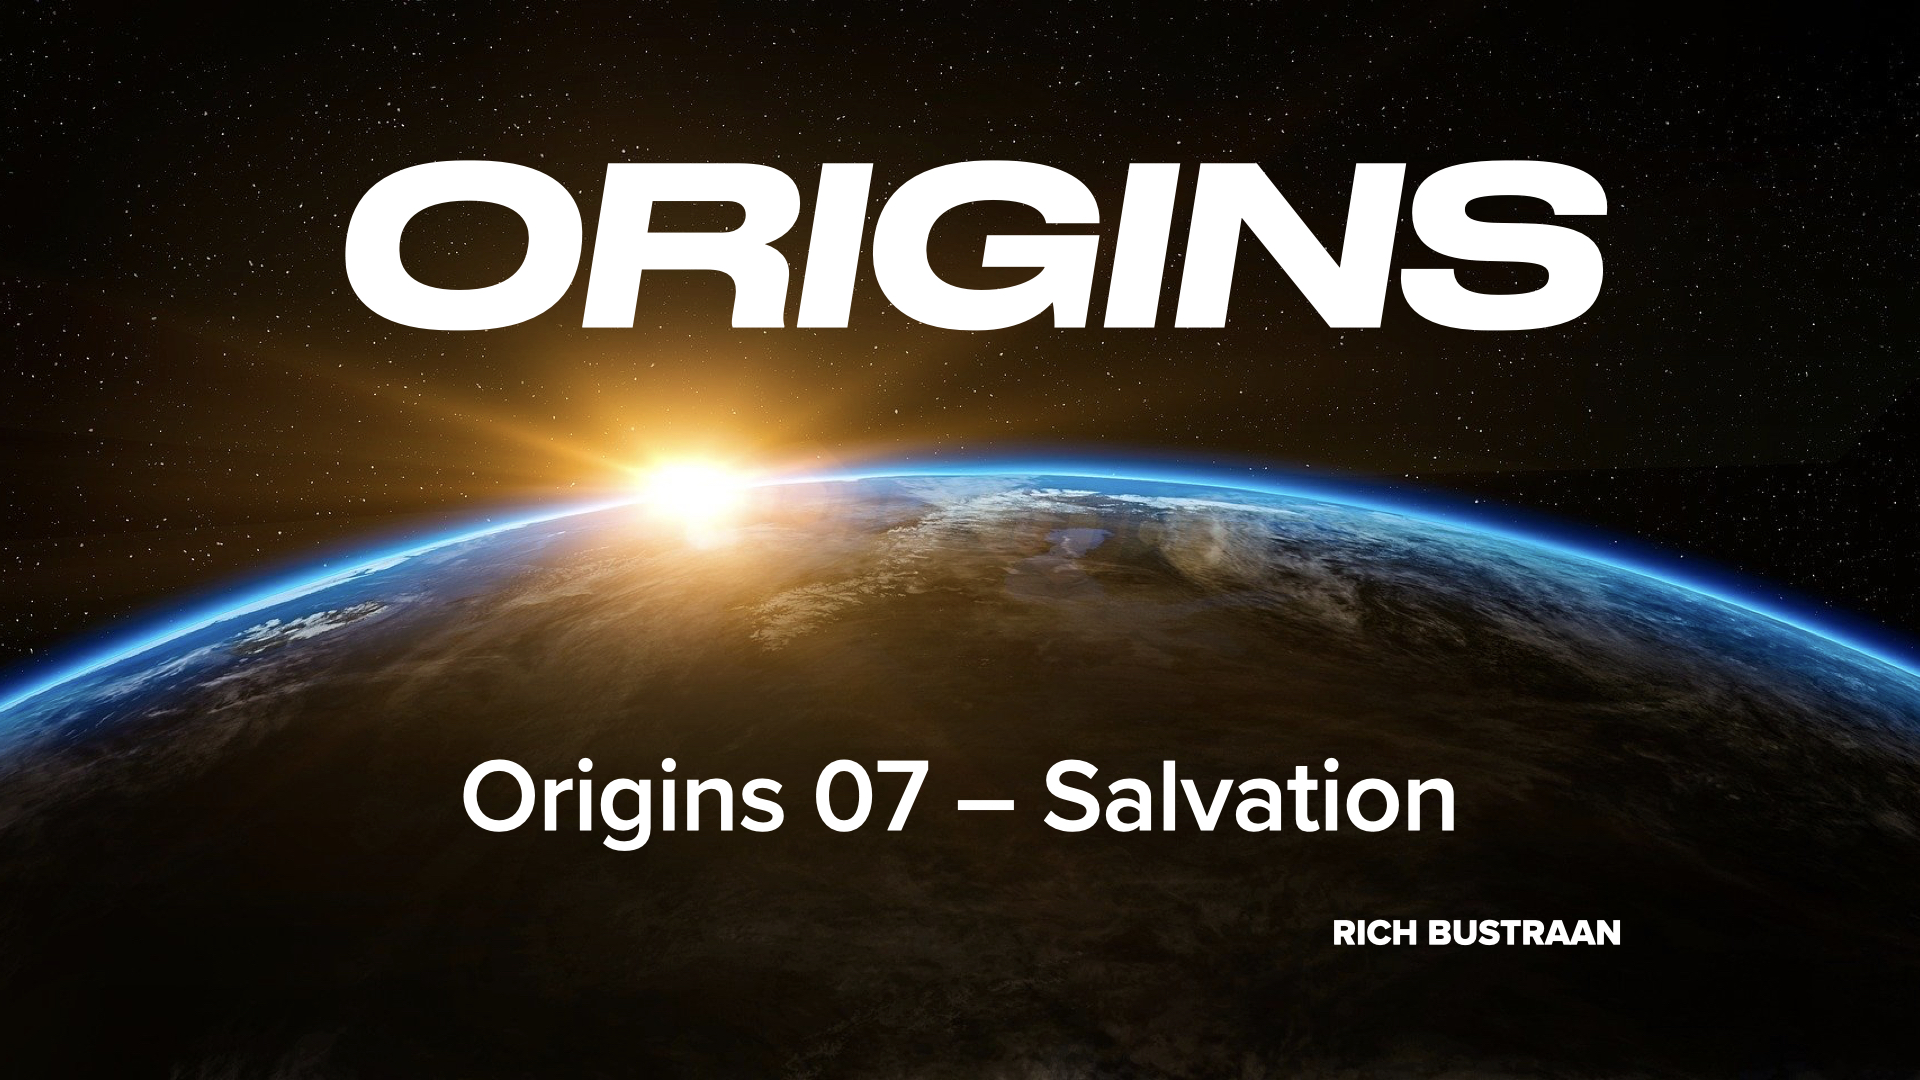 Origins 07 - Salvation